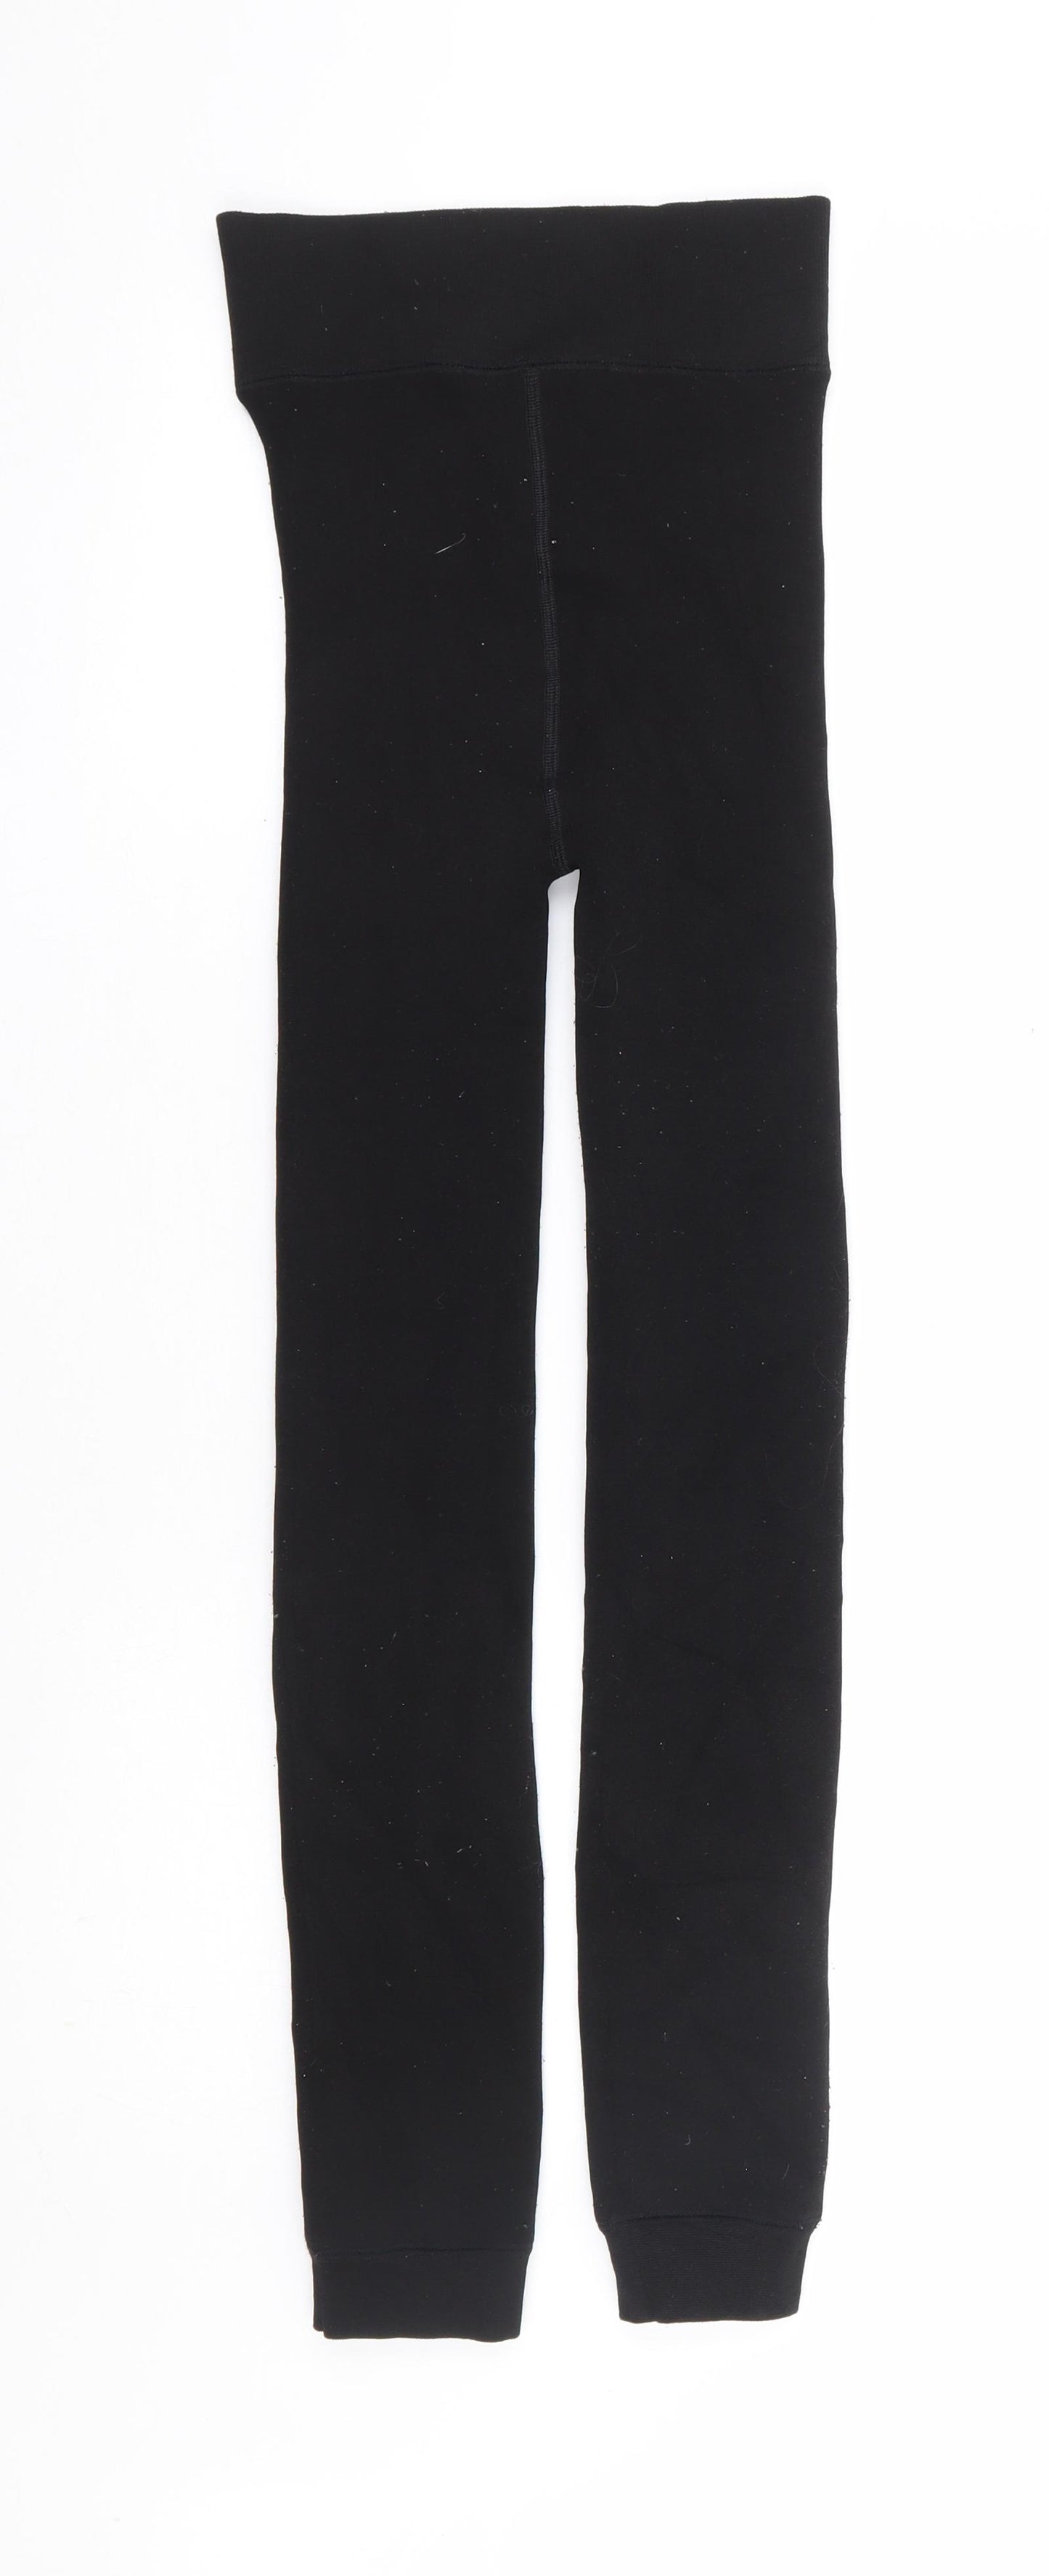 Preworn Womens Black Polyester Jogger Leggings Size S L27 in - Fur Lined Legging